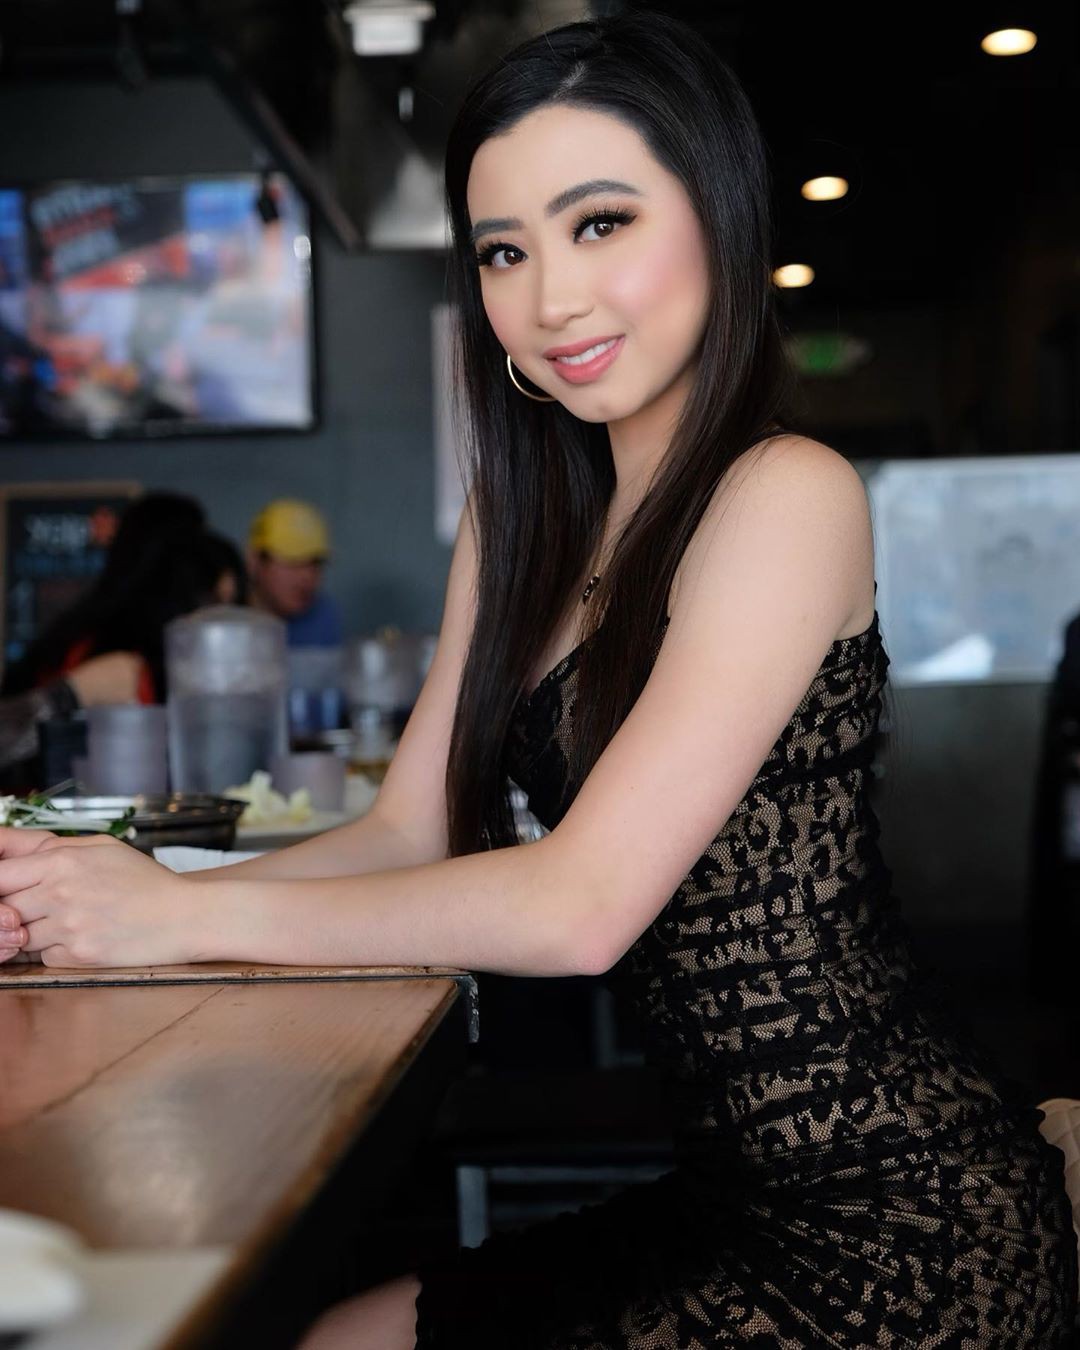 Elizabeth Nguyen piernas calientes, Black Hairstyle Ideas y Long Hair Women: Pelo largo,  Atuendos Sexys,  modelo caliente,  pelo negro,  chicas de instagram  